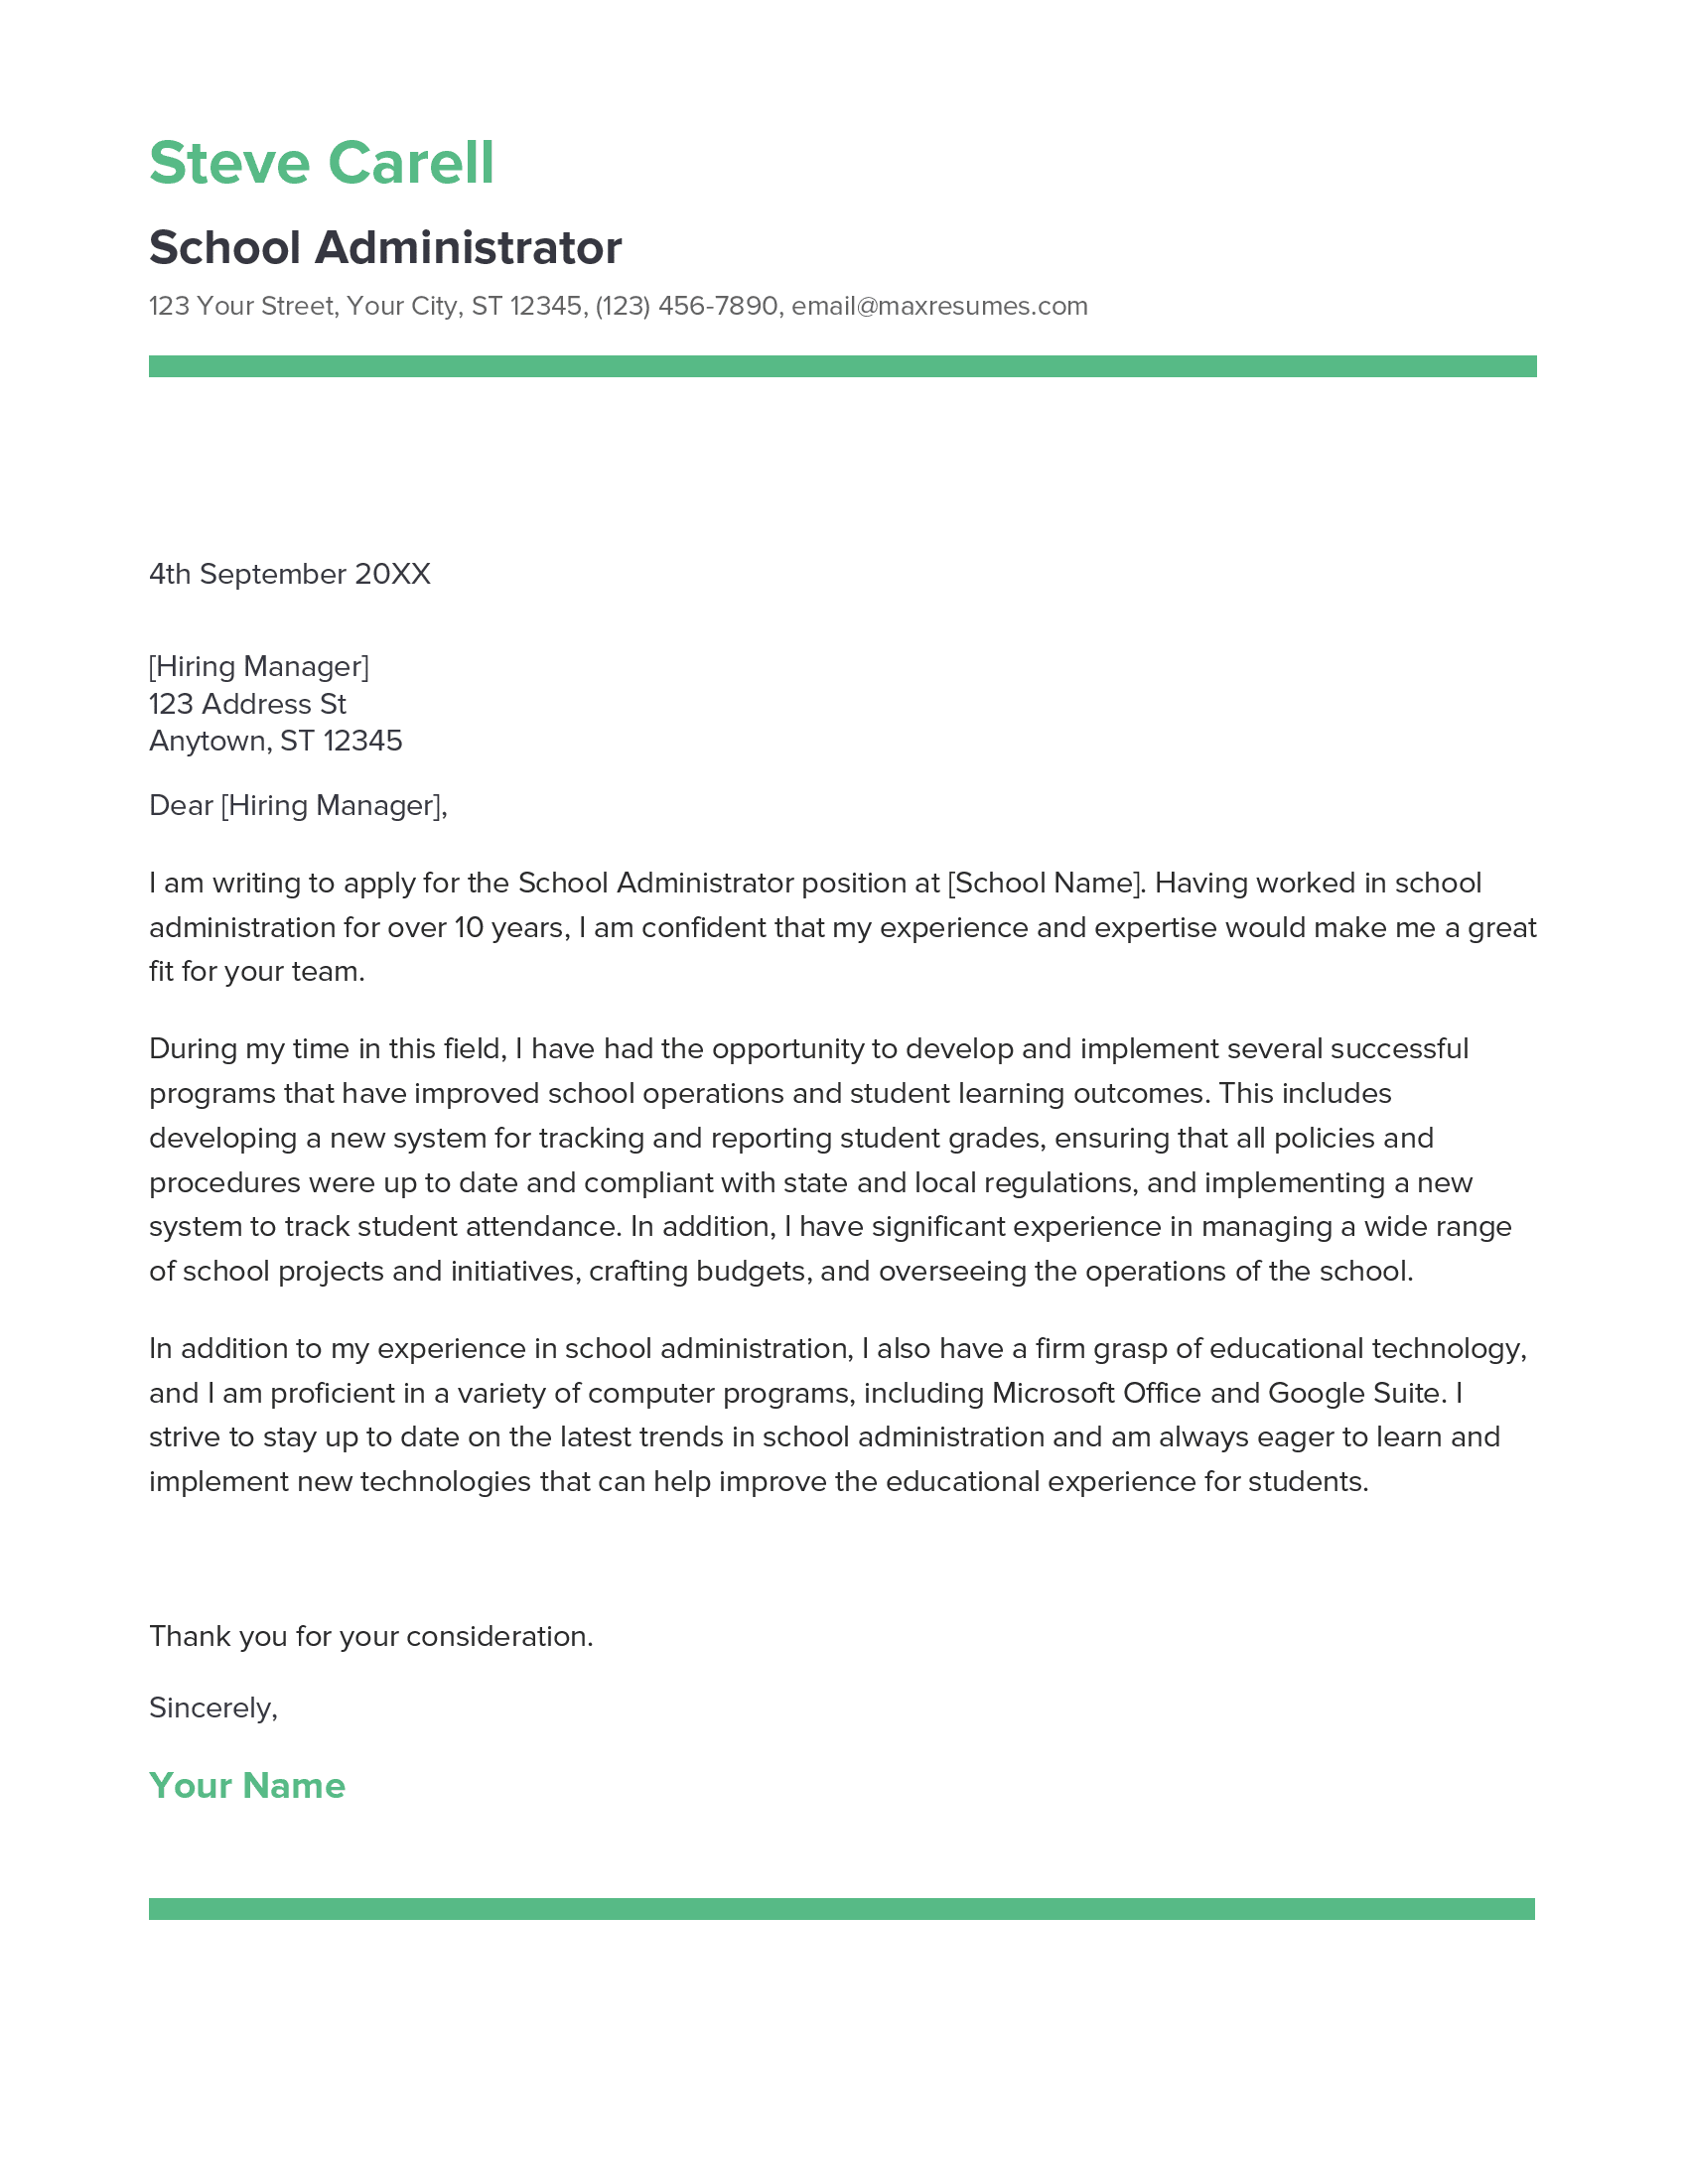 school administrator application letter